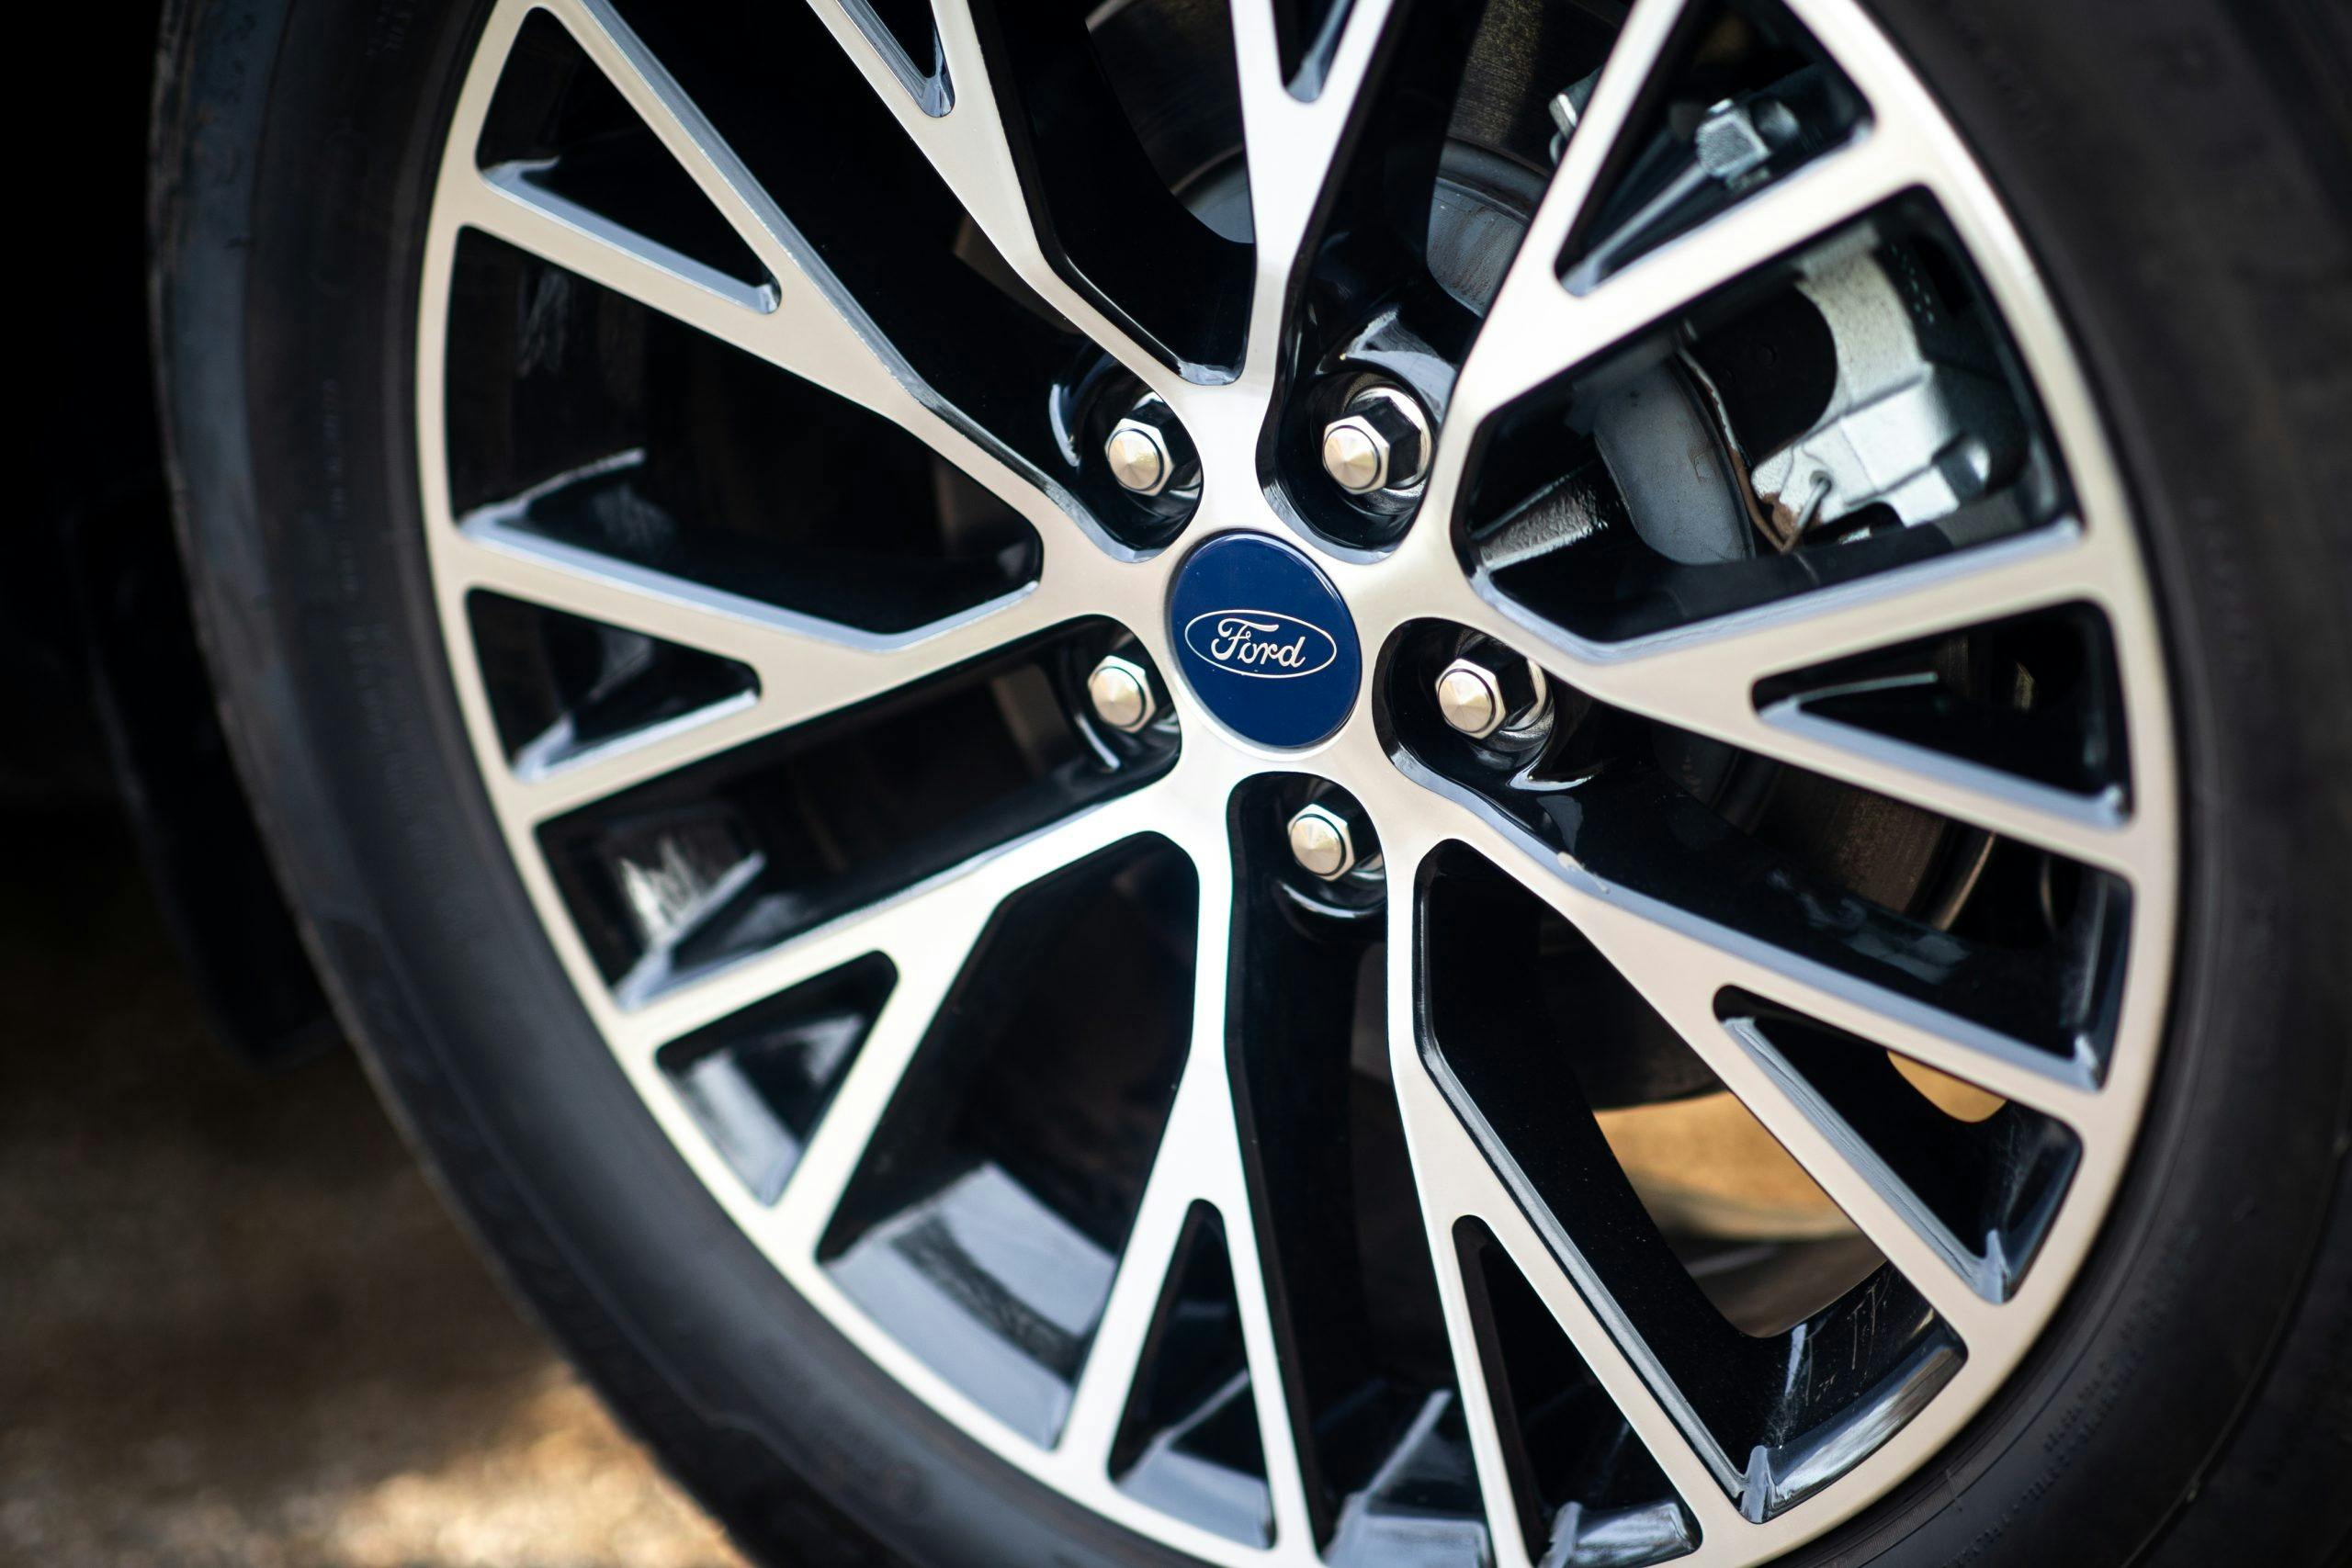 2021 Ford Escape PHEV wheel detail